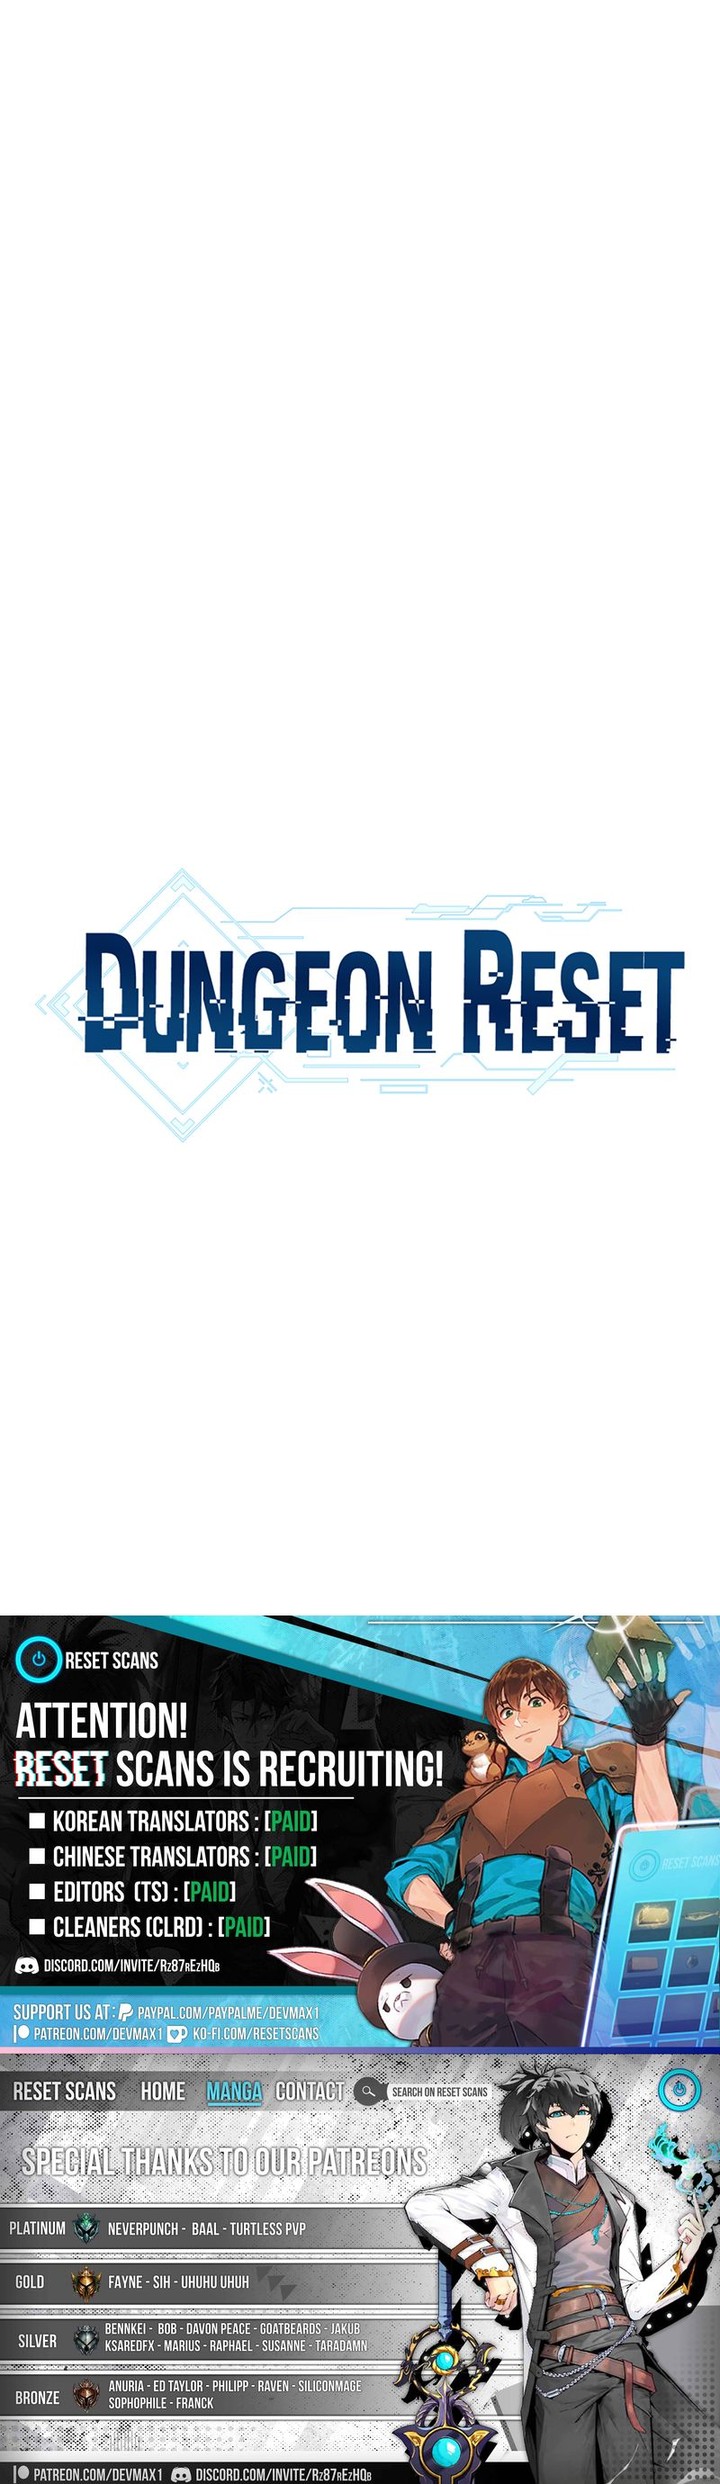 Dungeon Reset 191 38